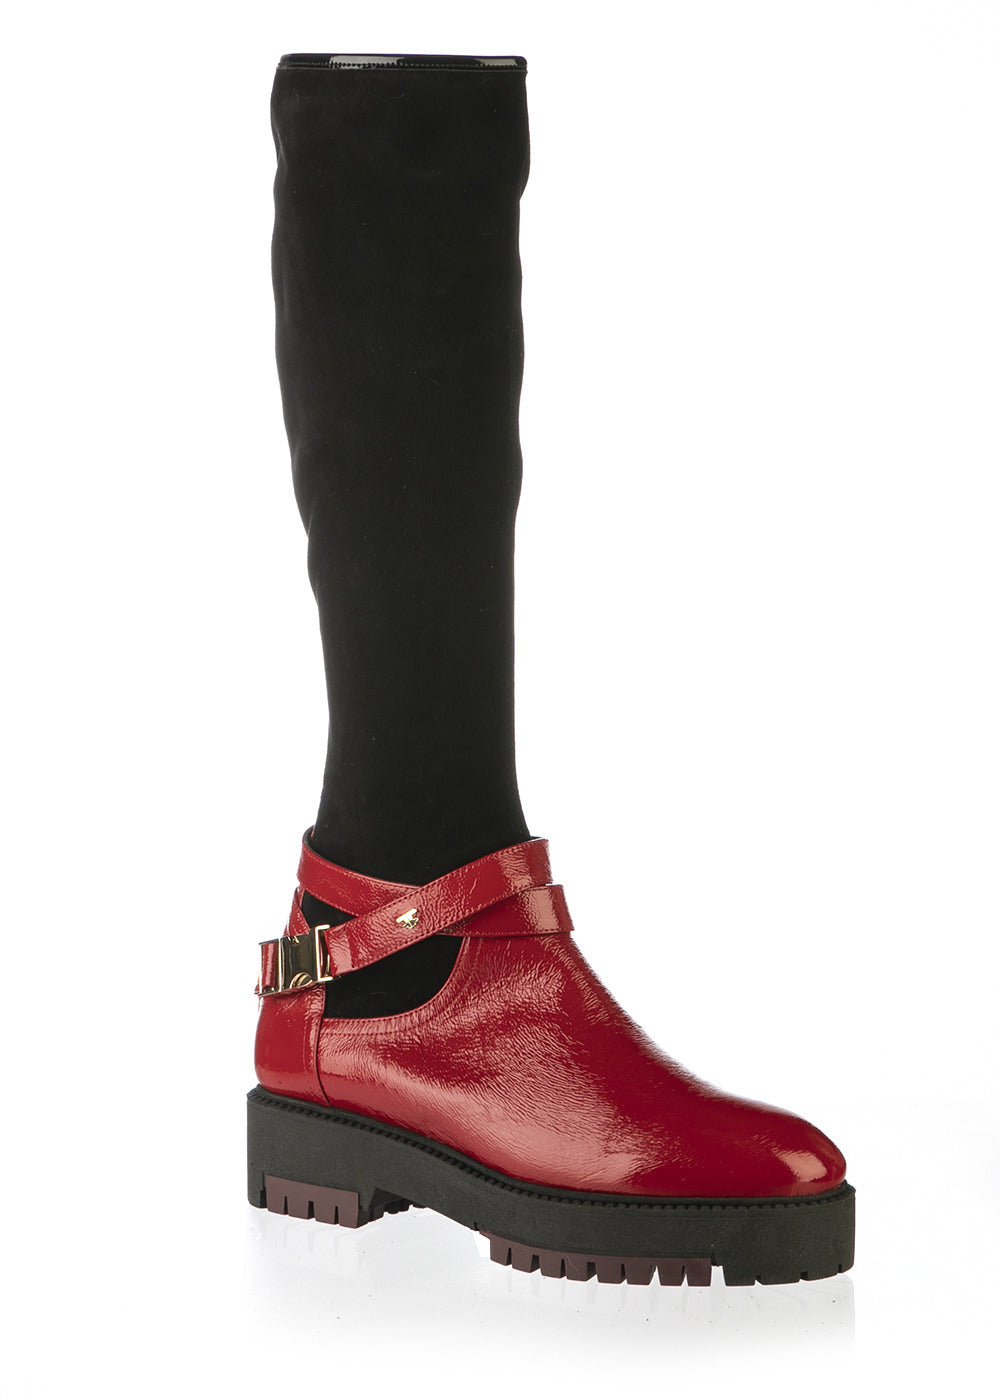 6834 Fiorangelo Boots / Black-Red